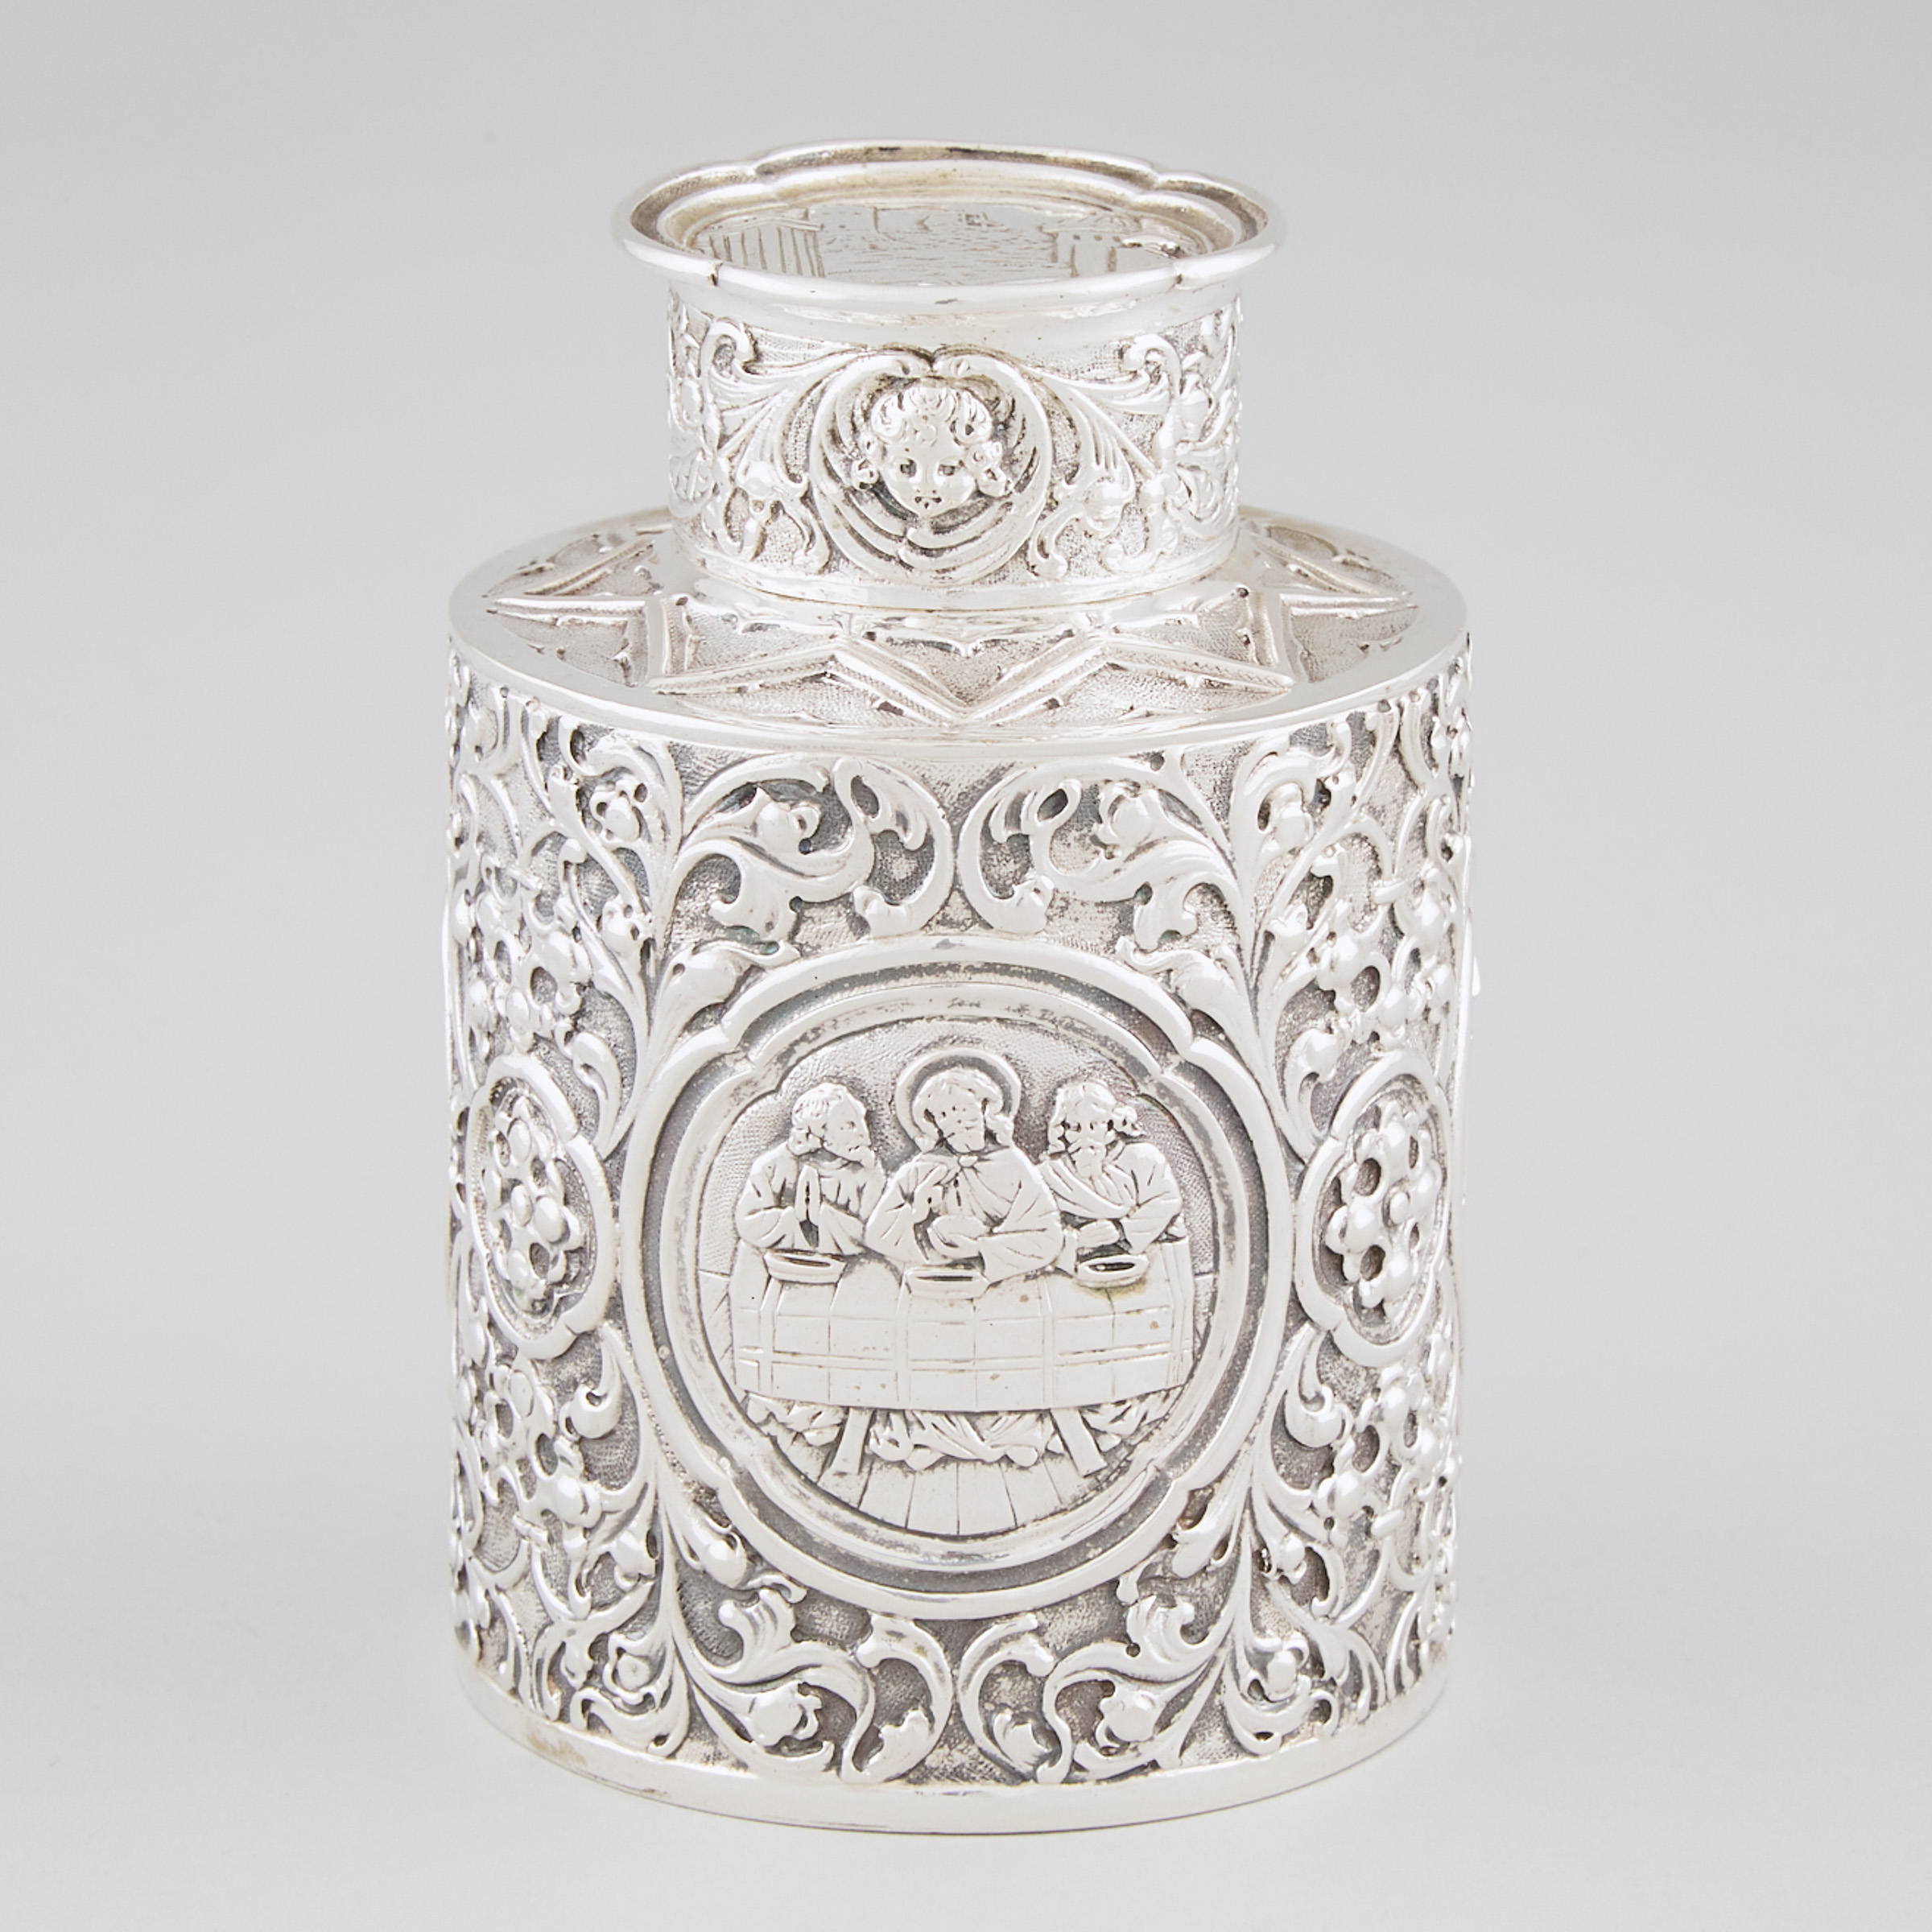 German Silver Repoussé Tea Caddy, Friedrich Reusswig, Hanau, early 20th century